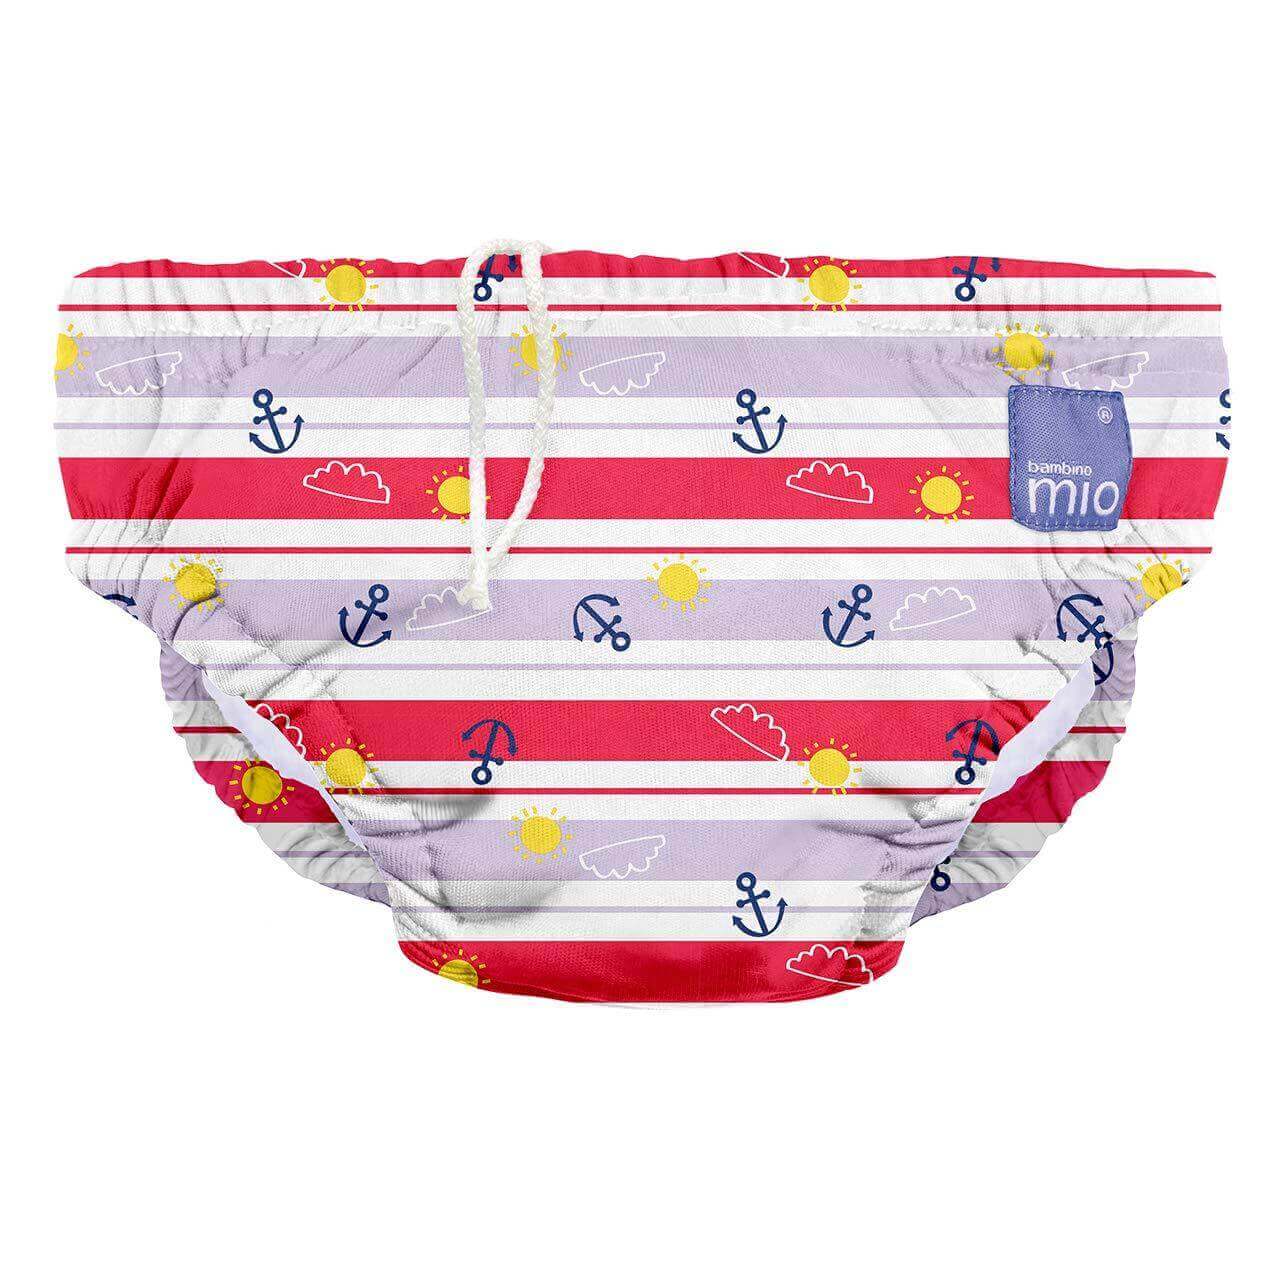 Bambino Mio Nice and Nautical Reusable Swim Nappy Colour: Anchors Away Size: Small reusable swim nappies Earthlets